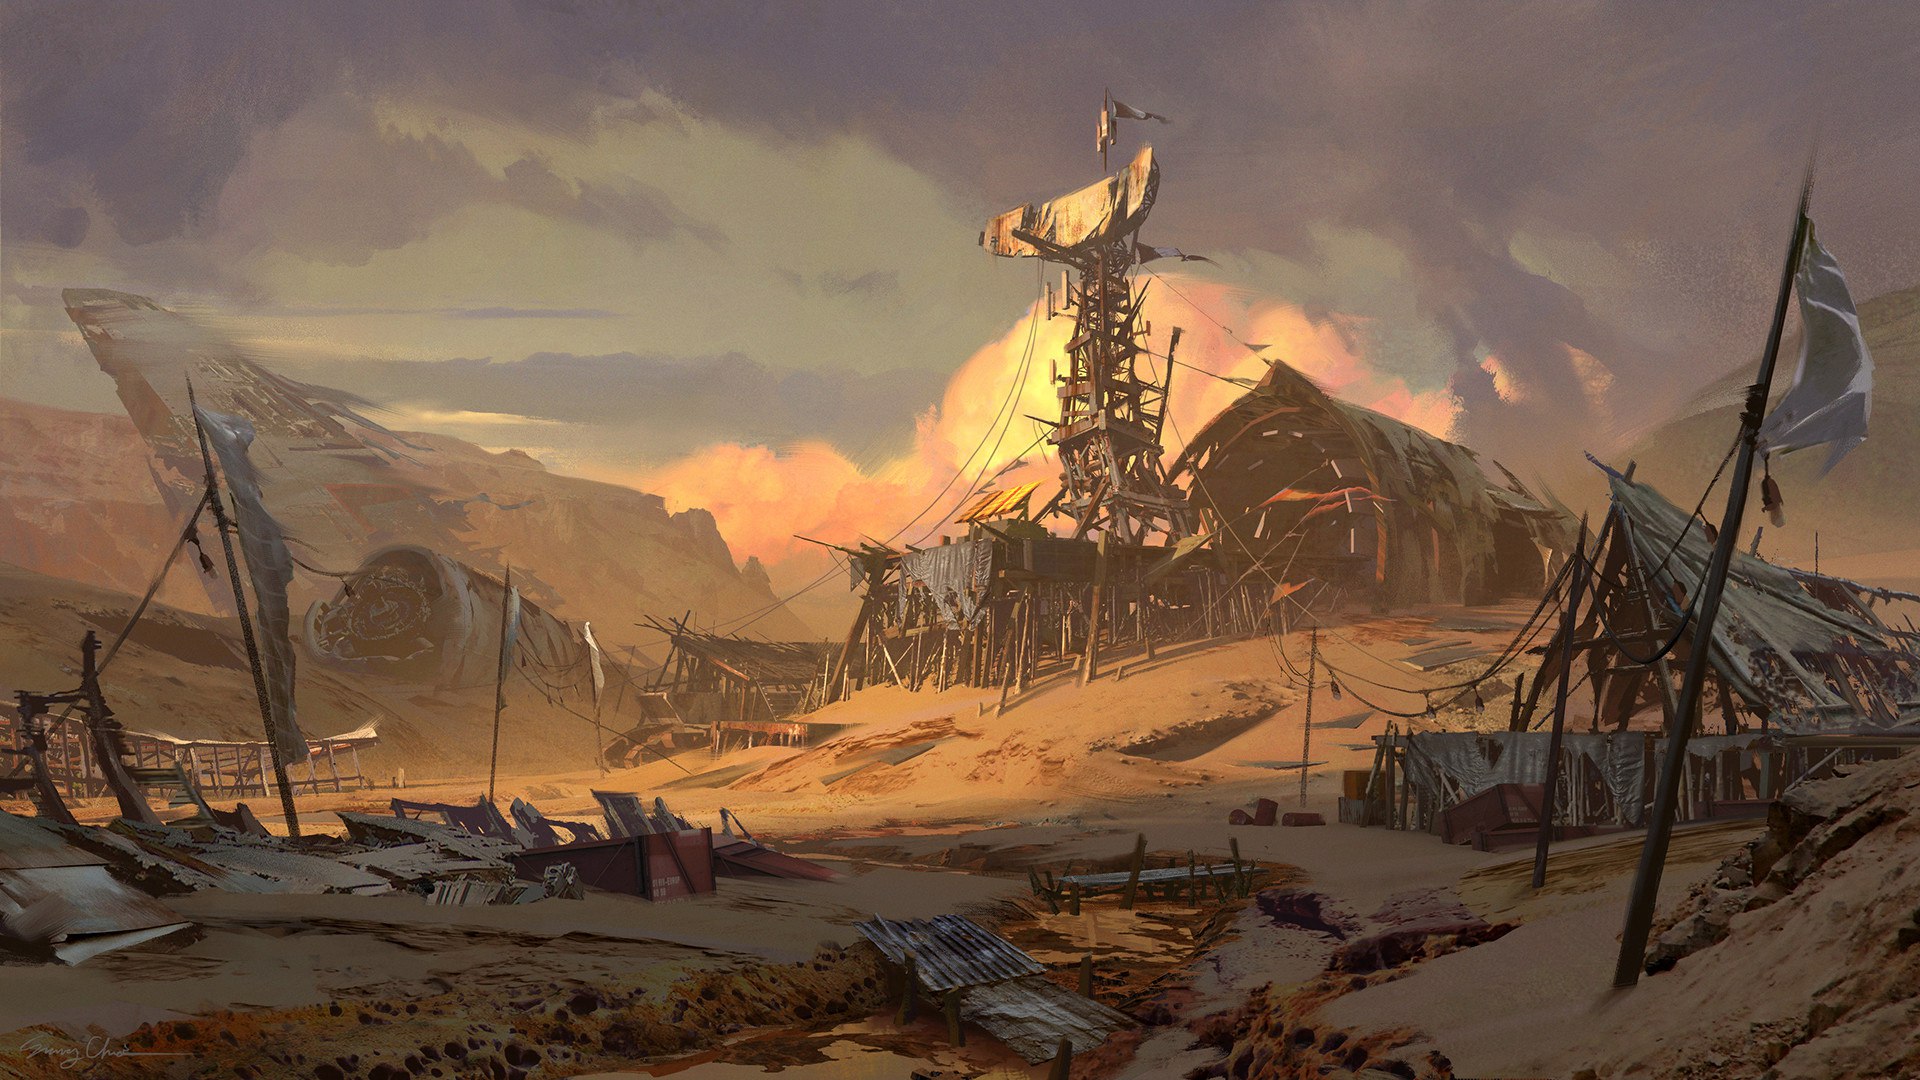 General 1920x1080 digital art fantasy art futuristic science fiction desert satellite apocalyptic